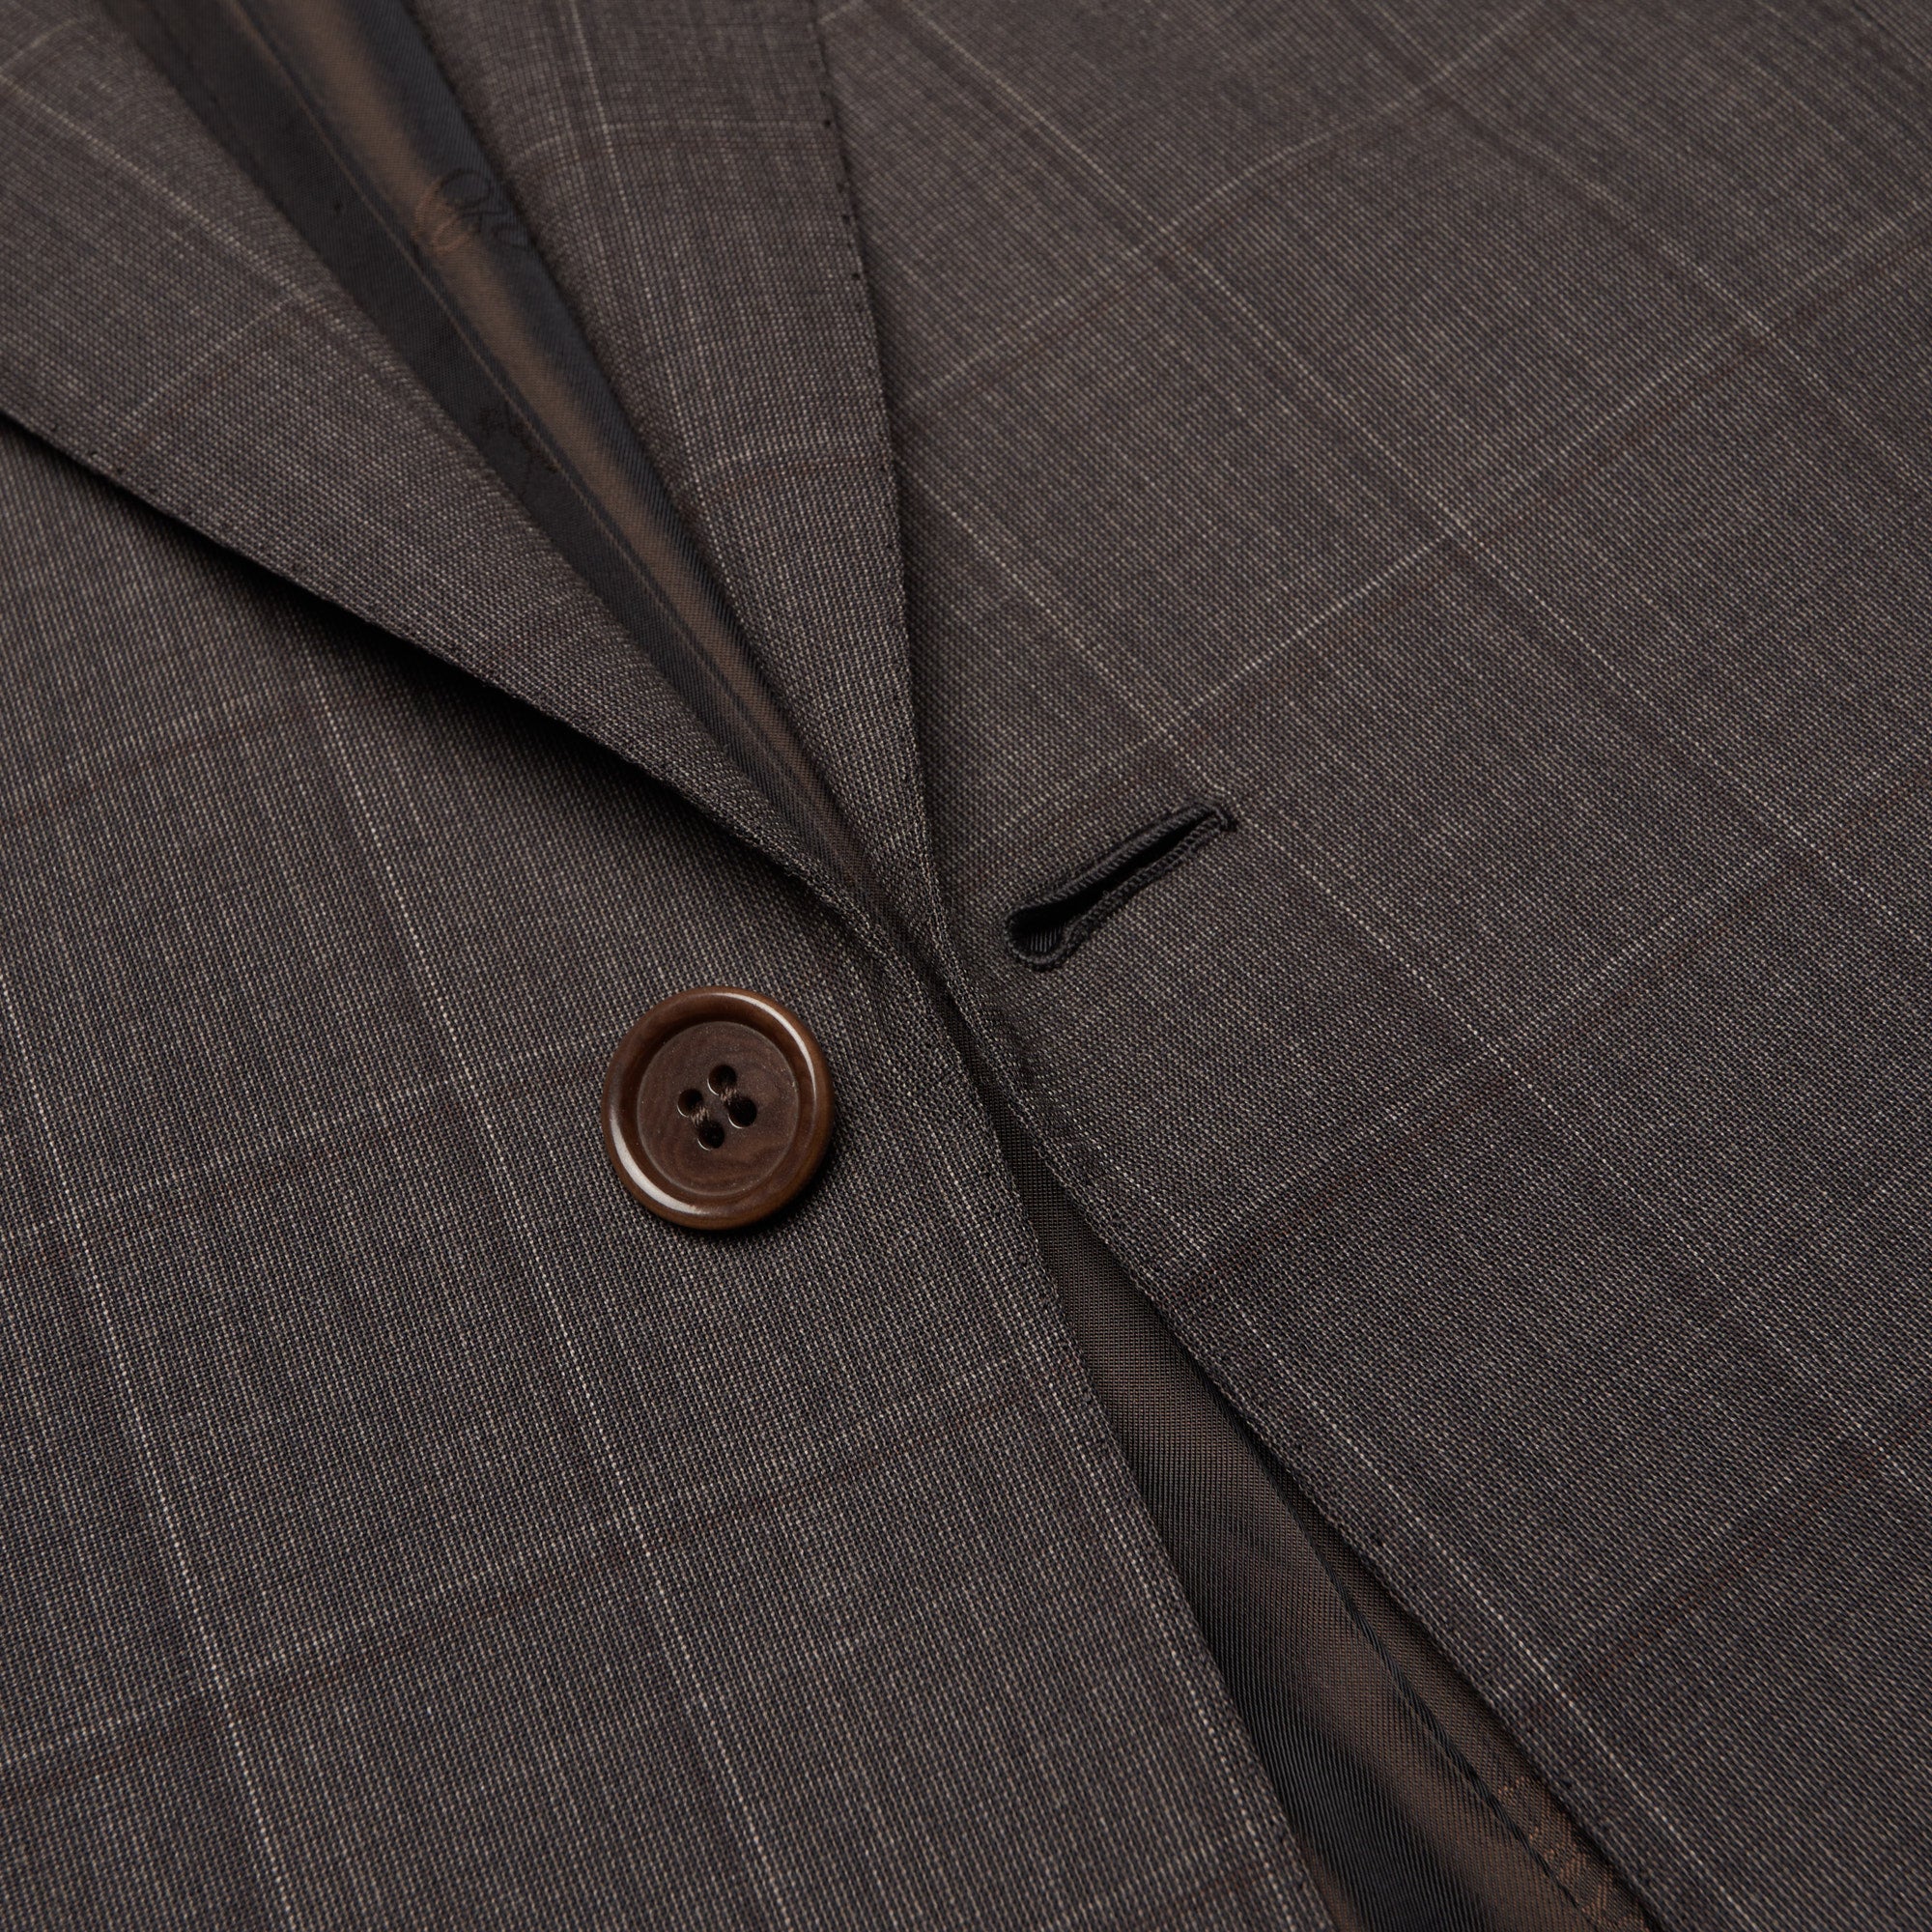 BRIONI "SECOLO" Handmade Gray Plaid Wool Super 150' Suit EU 52 NEW US 42 BRIONI